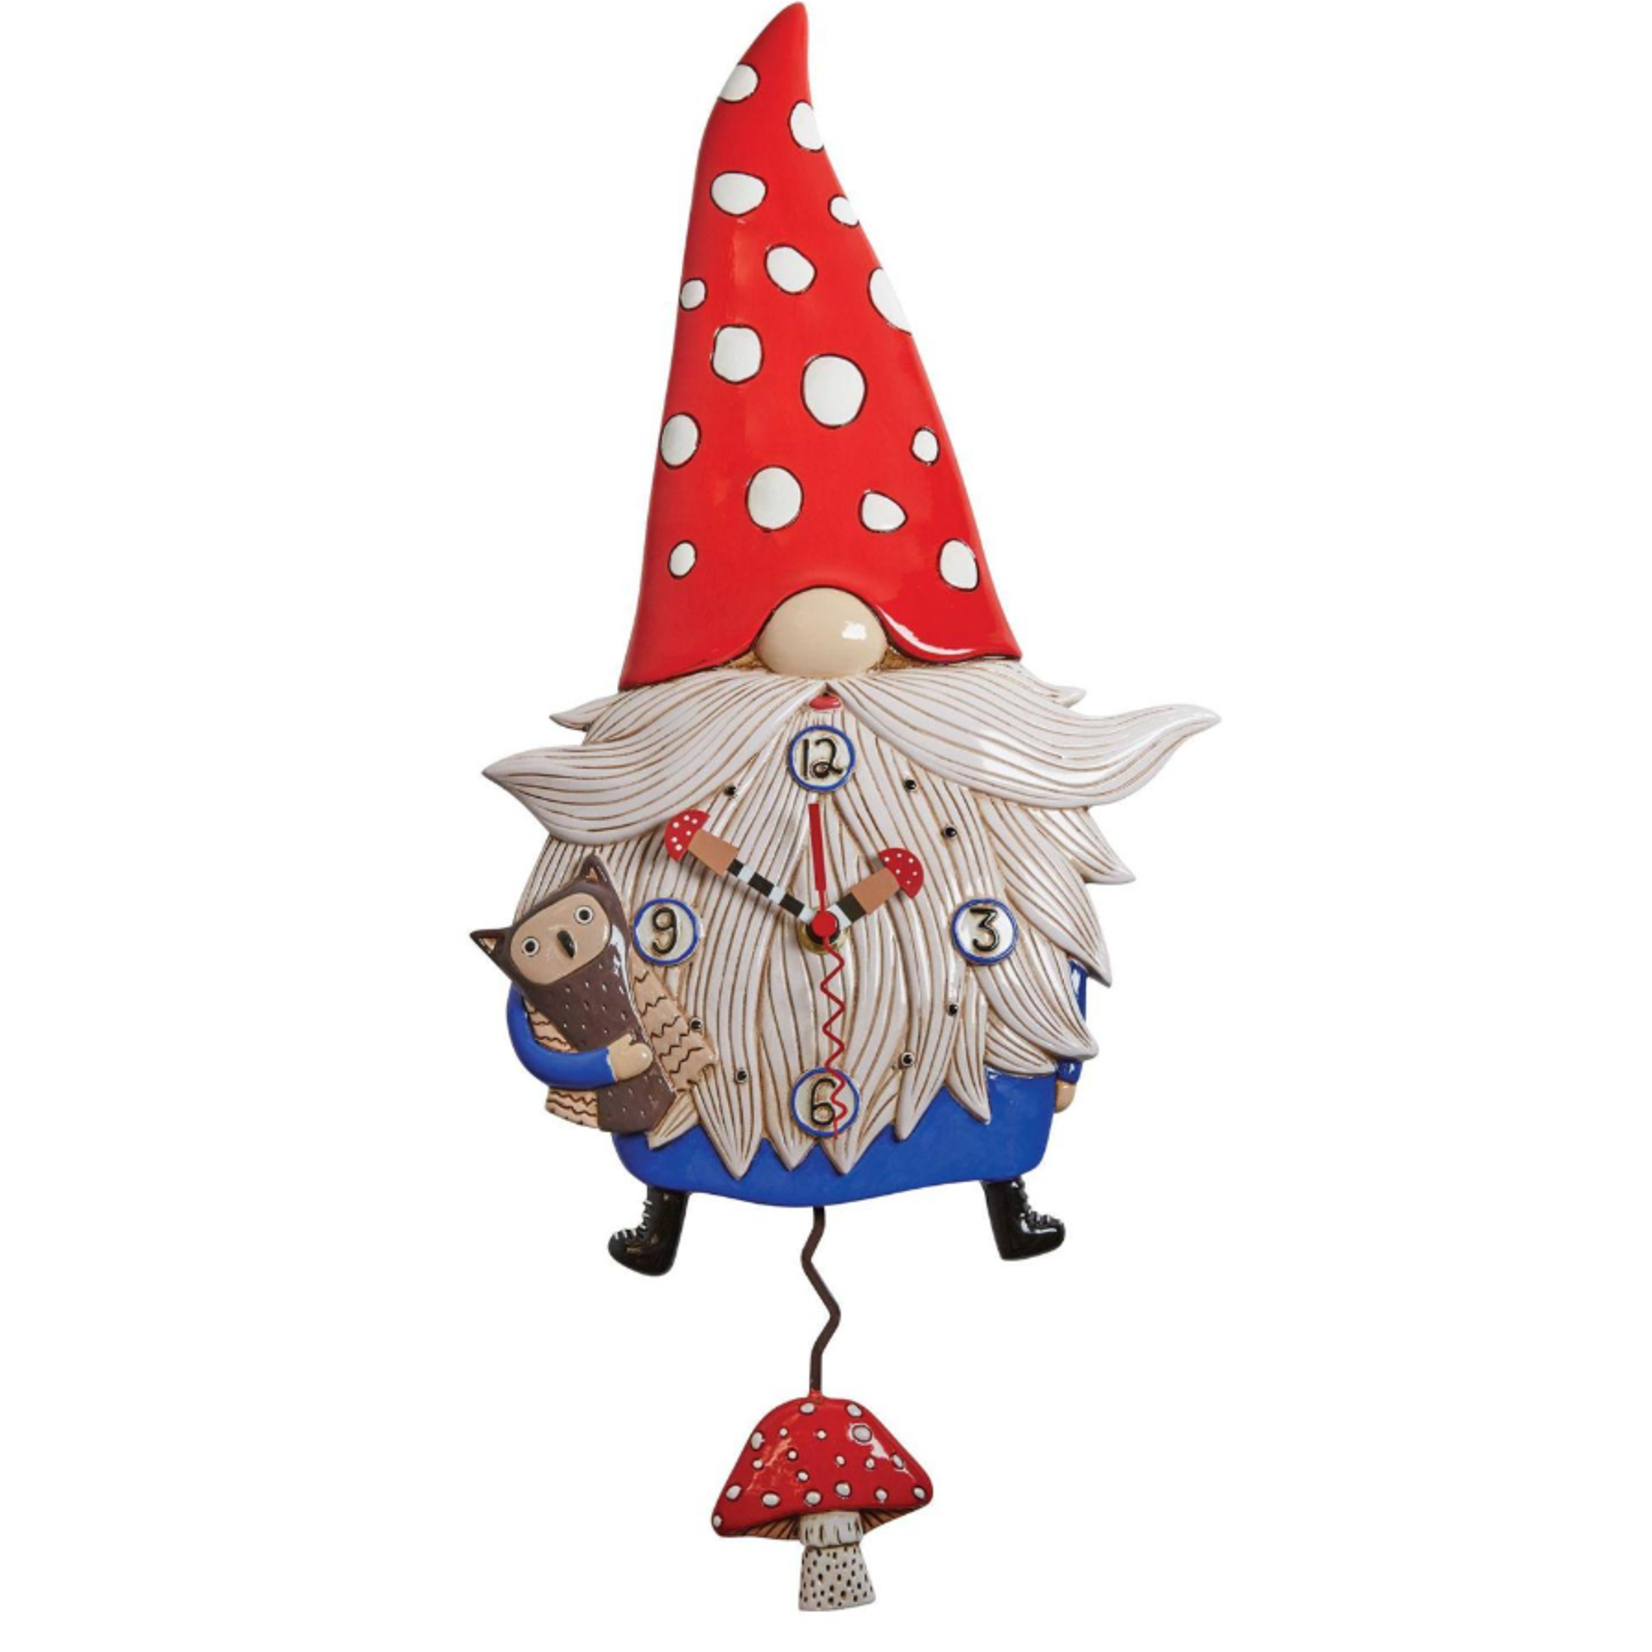 ALLEN DESIGN CLOCK Wren the Gnome